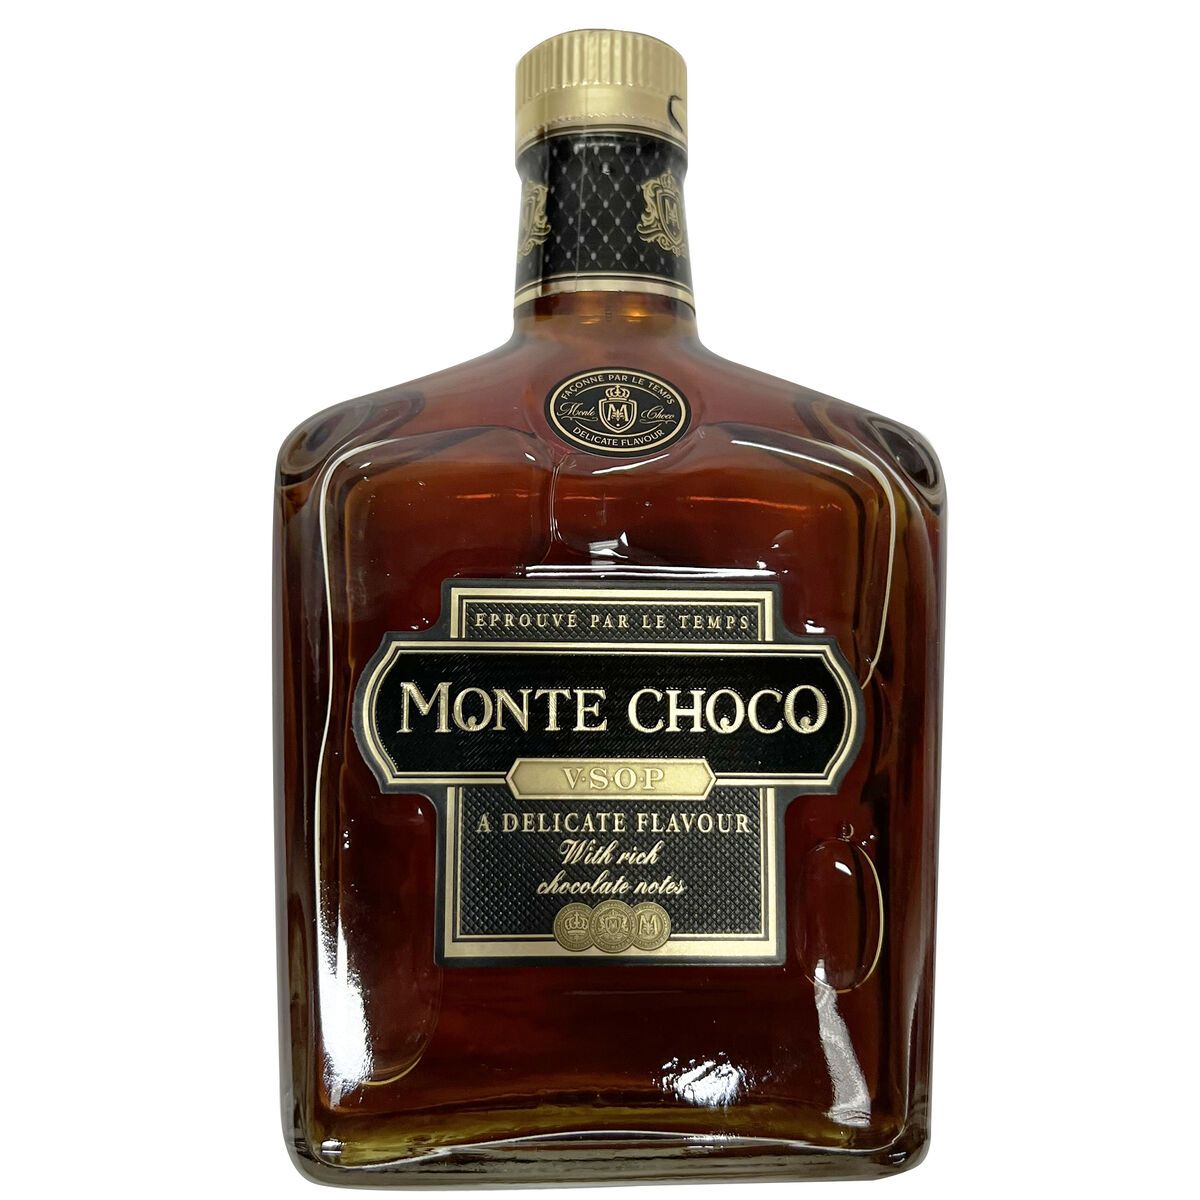 Коньяк шоко. Монте Чоко коньяк шоколадная гора. Монте Чоко коньяк шоколадный. Коньяк Монте шоко 5. Коньяк Monte Choco шоколад.